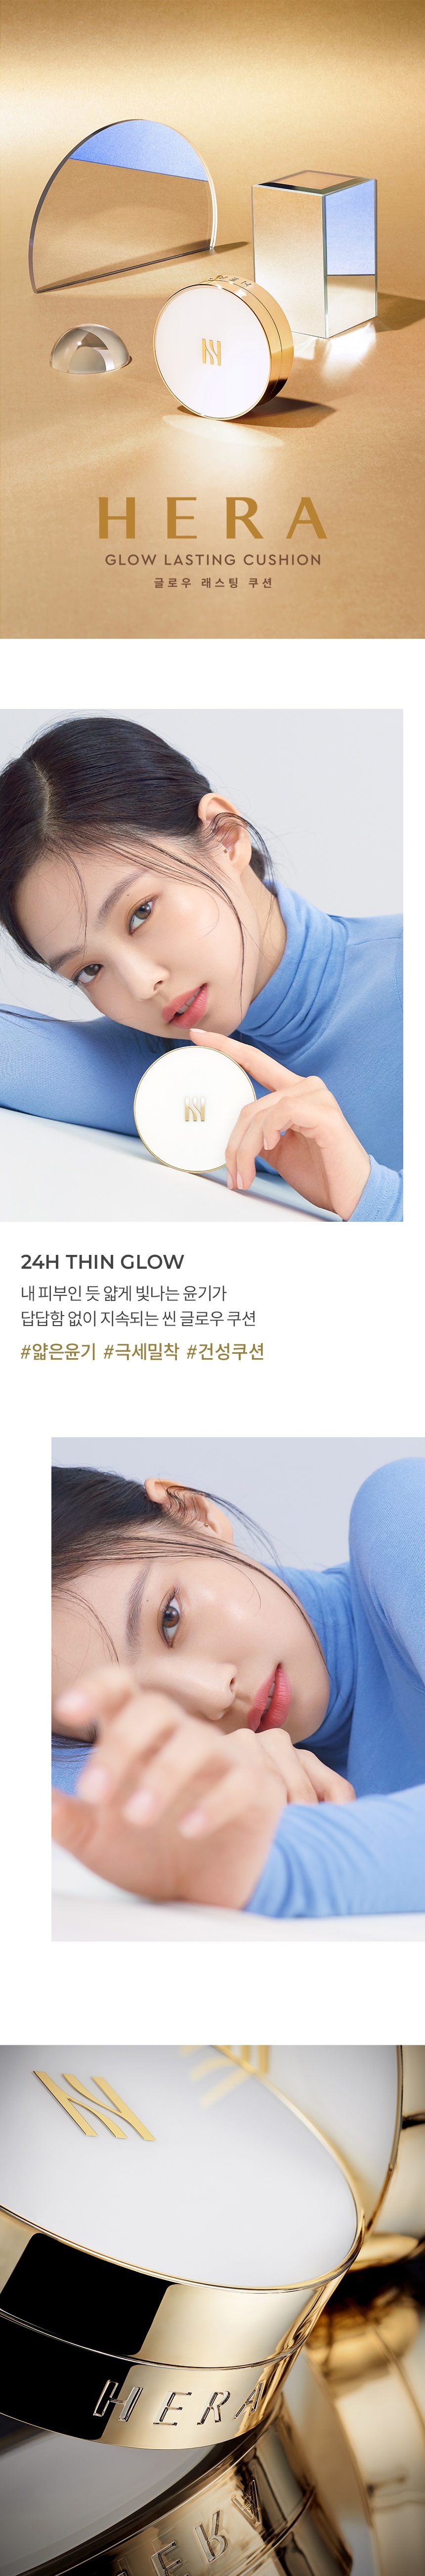 Hera Glow Lasting Cushion SPF50+ PA+++ 15g+15g korean cosmetic product online shop malaysia China india1